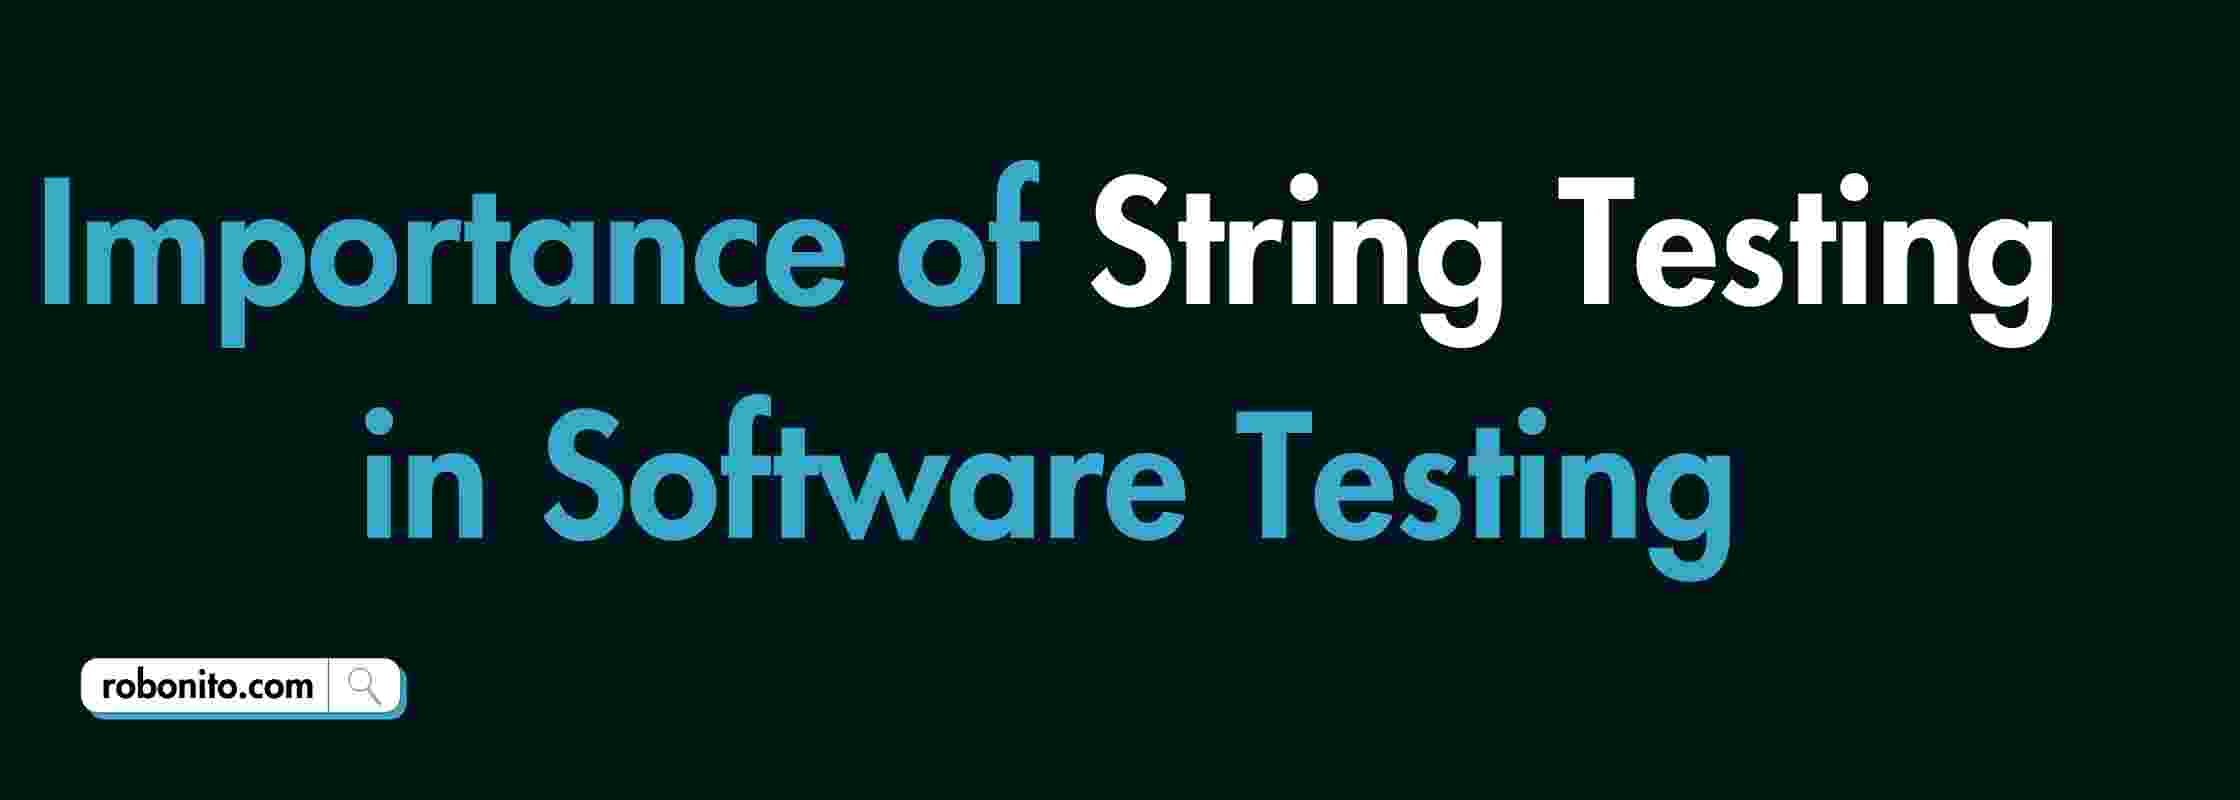 String testing